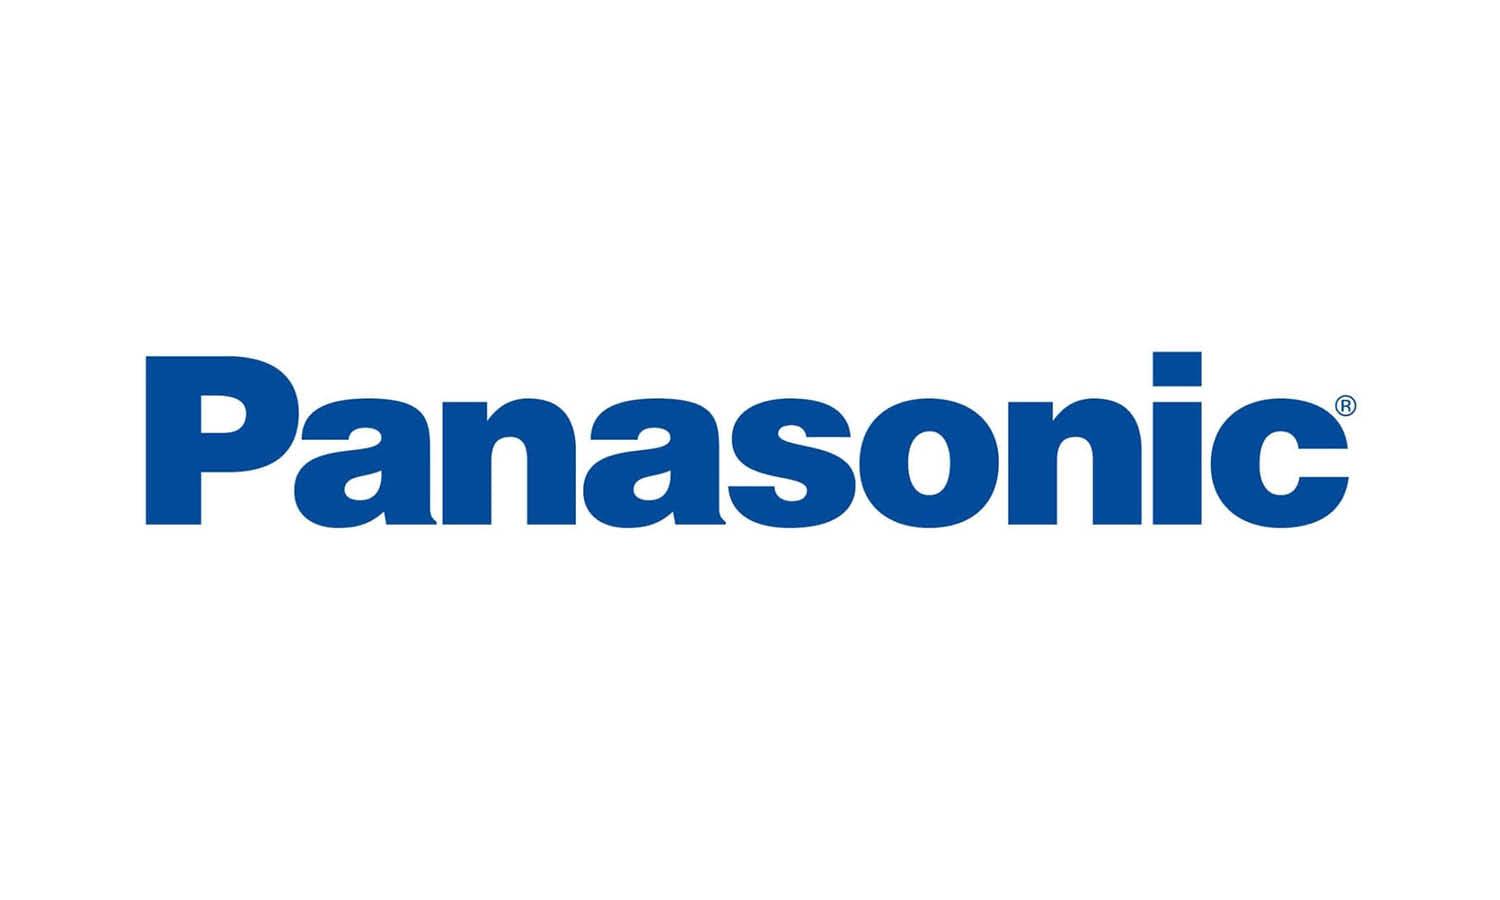 Panasonic Logo Design: History & Evolution - Kreafolk